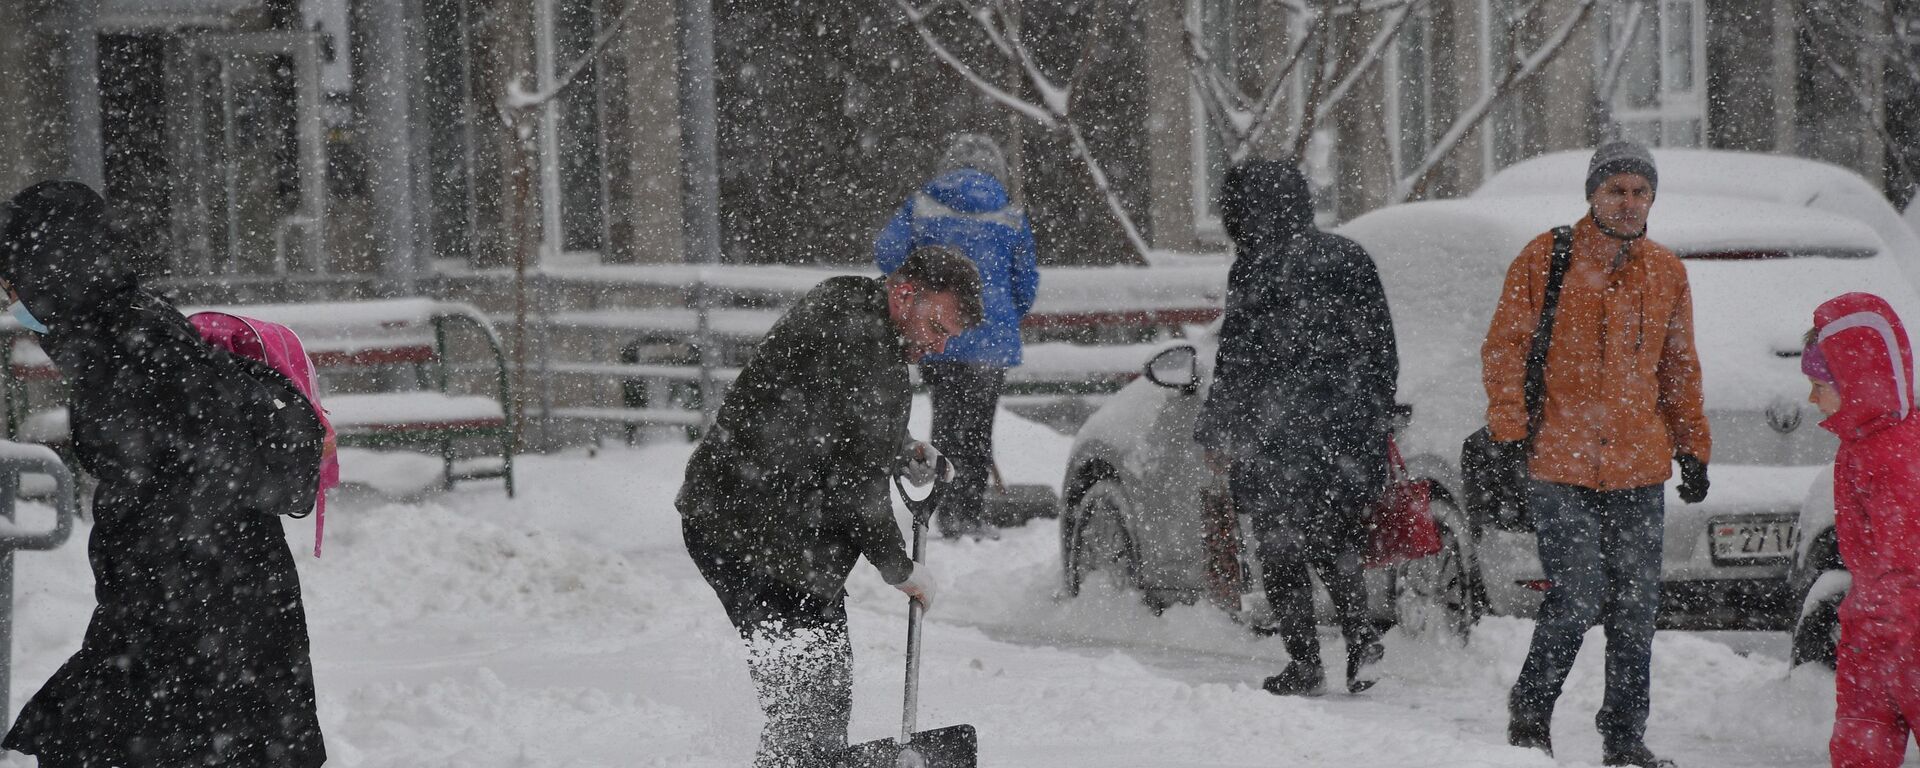 Минчанин убирает снег на территории двора - Sputnik Беларусь, 1920, 11.02.2021